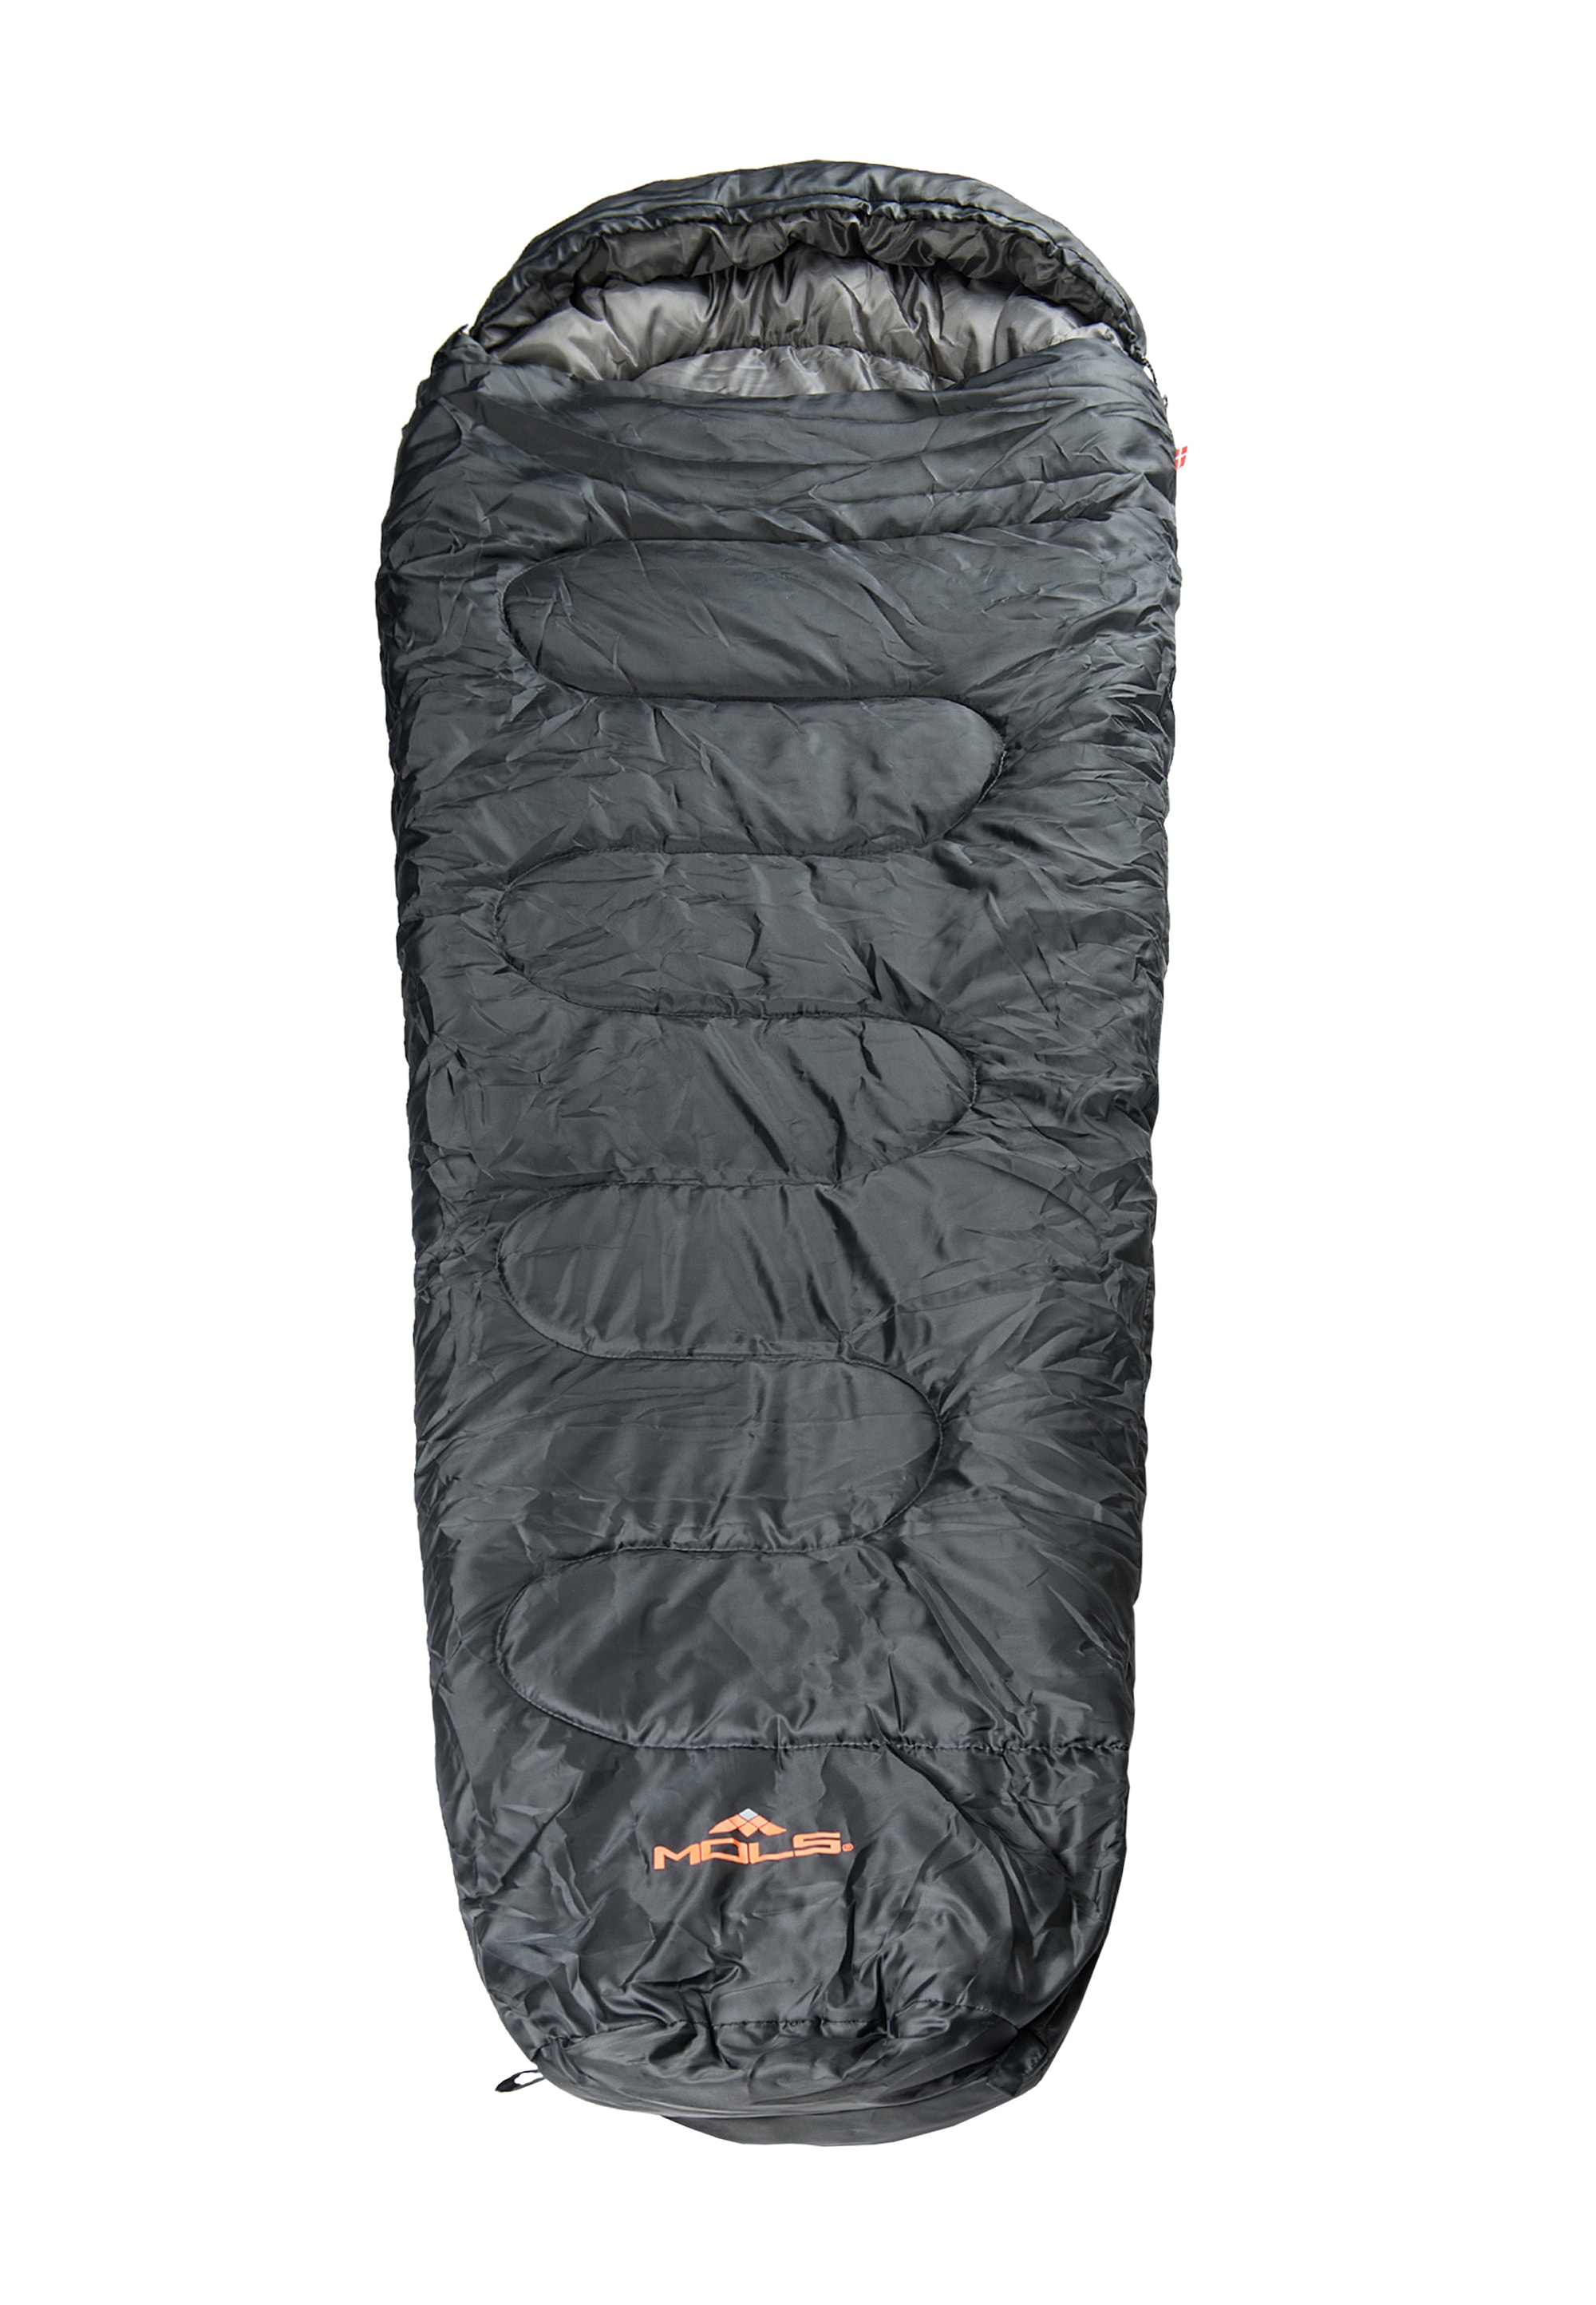 MOLS Trekkingschlafsack »Treck 150«, mit atmungsaktiver Funktion